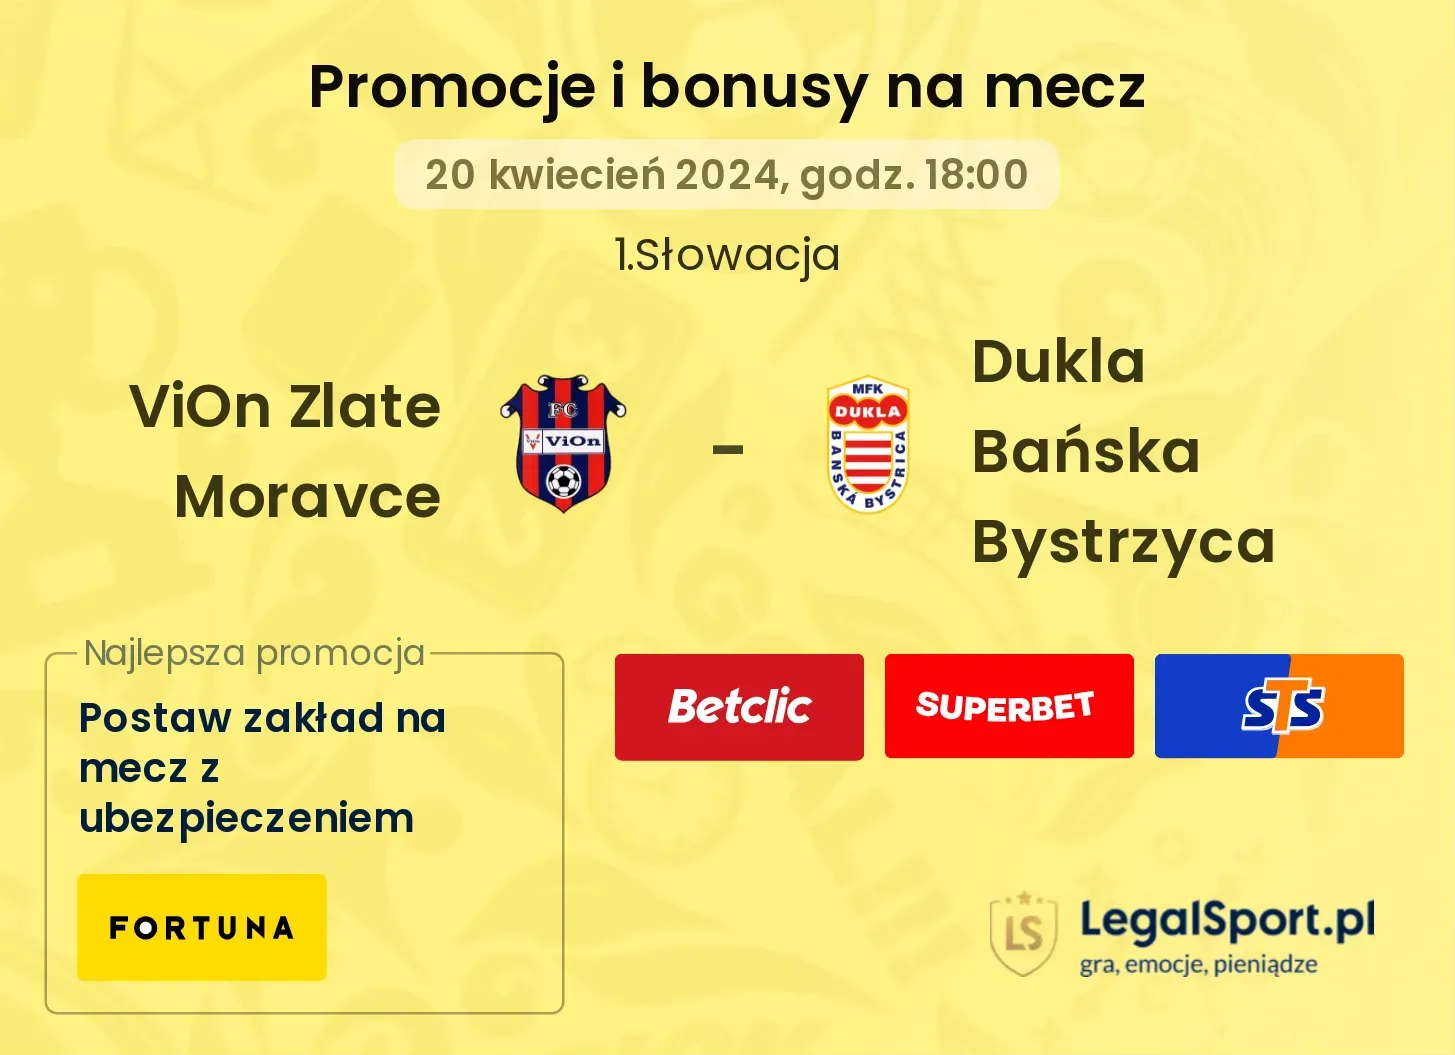 ViOn Zlate Moravce - Dukla Bańska Bystrzyca promocje bonusy na mecz